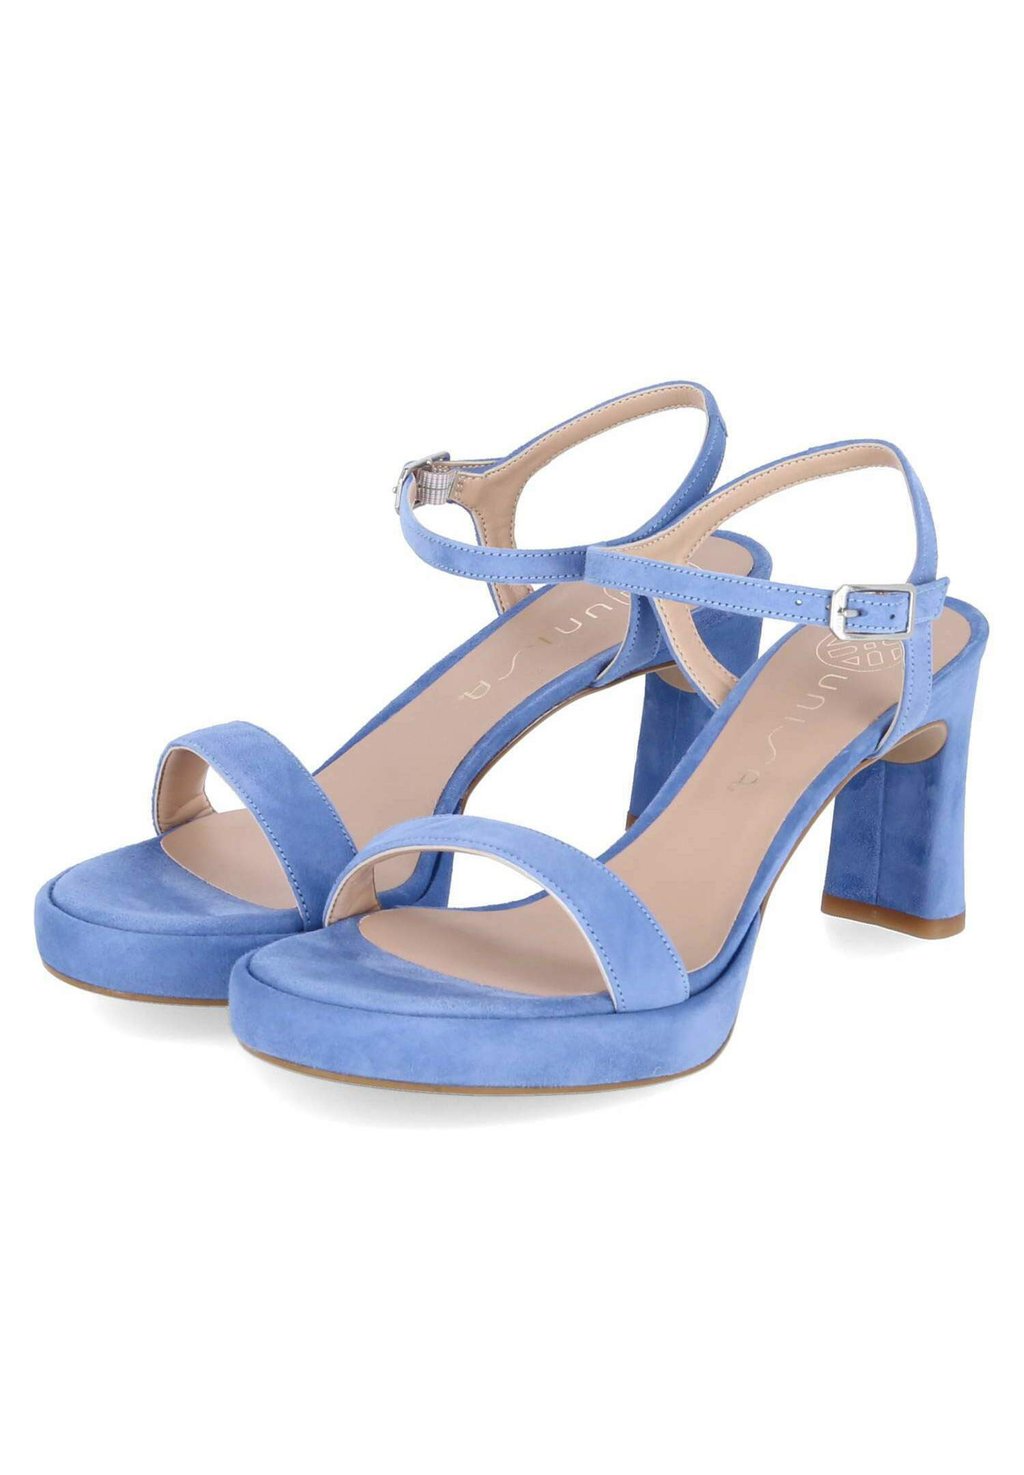 Босоножки на высоком каблуке SORO Unisa, цвет blau босоножки на высоком каблуке kaerlek цвет blau